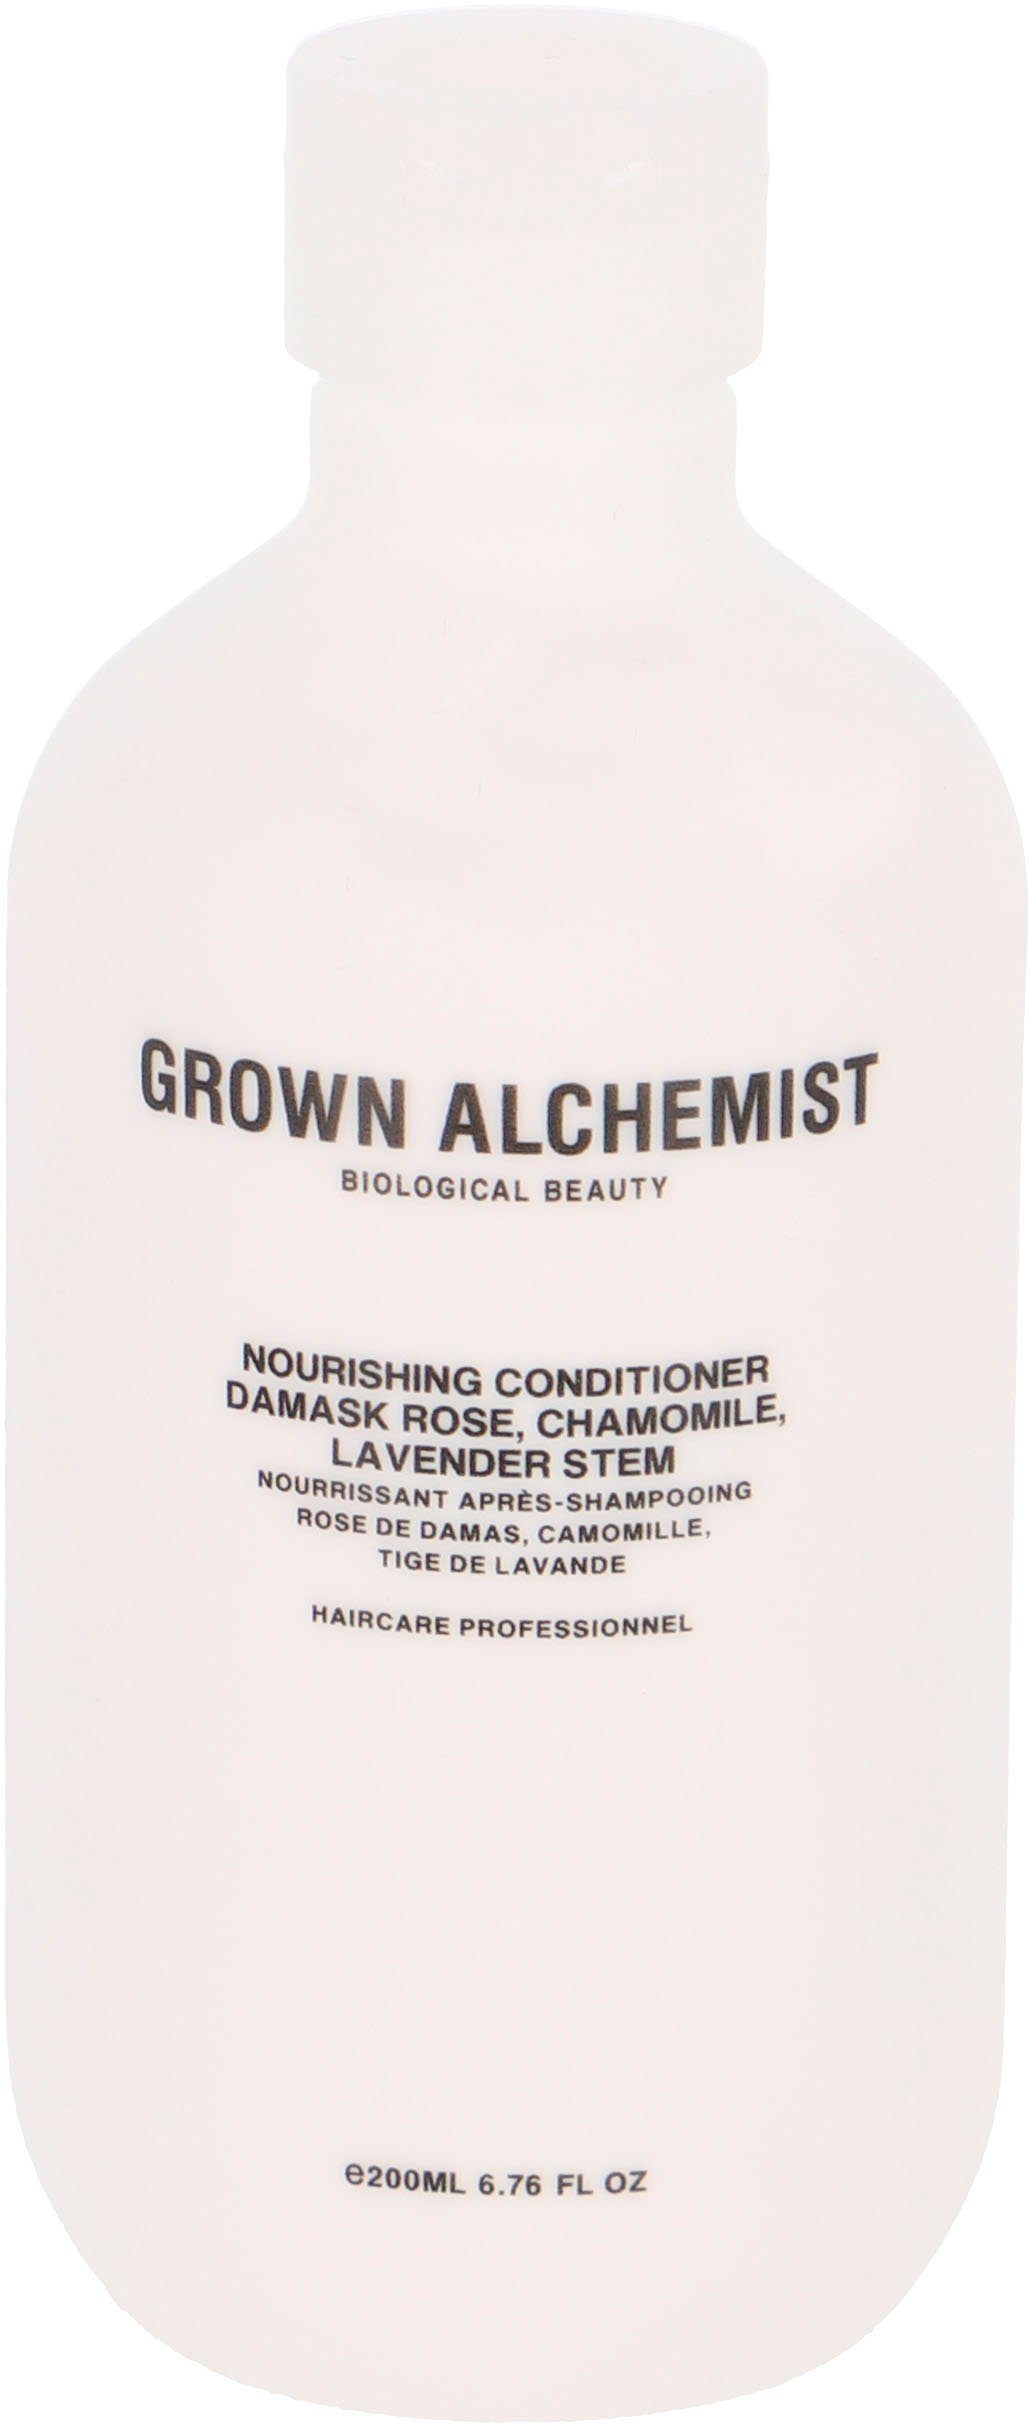 Stem GROWN Haarspülung Chamomile, Nourishing Rose, Damask Conditioner ALCHEMIST - 0.6, Lavender